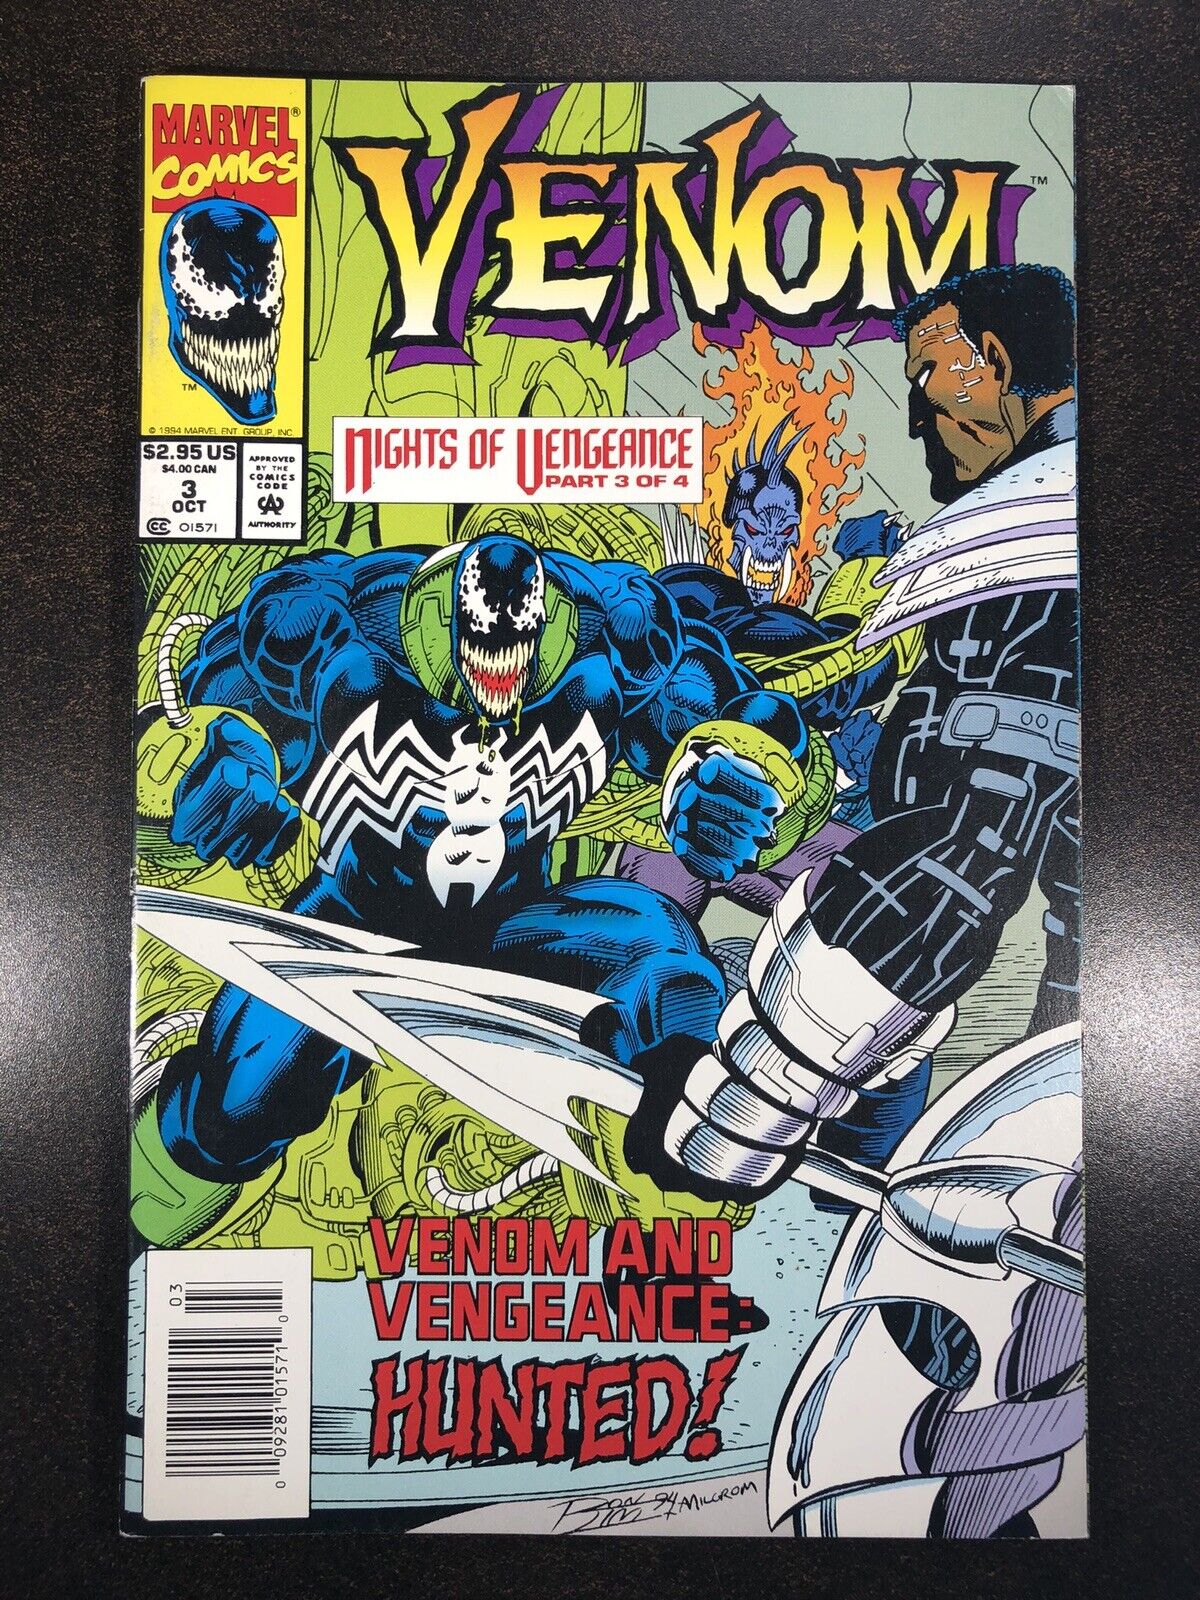 Venom: Nights of Vengeance #3 (1994) Venom & Vengeance HUNTED Pre-Owned